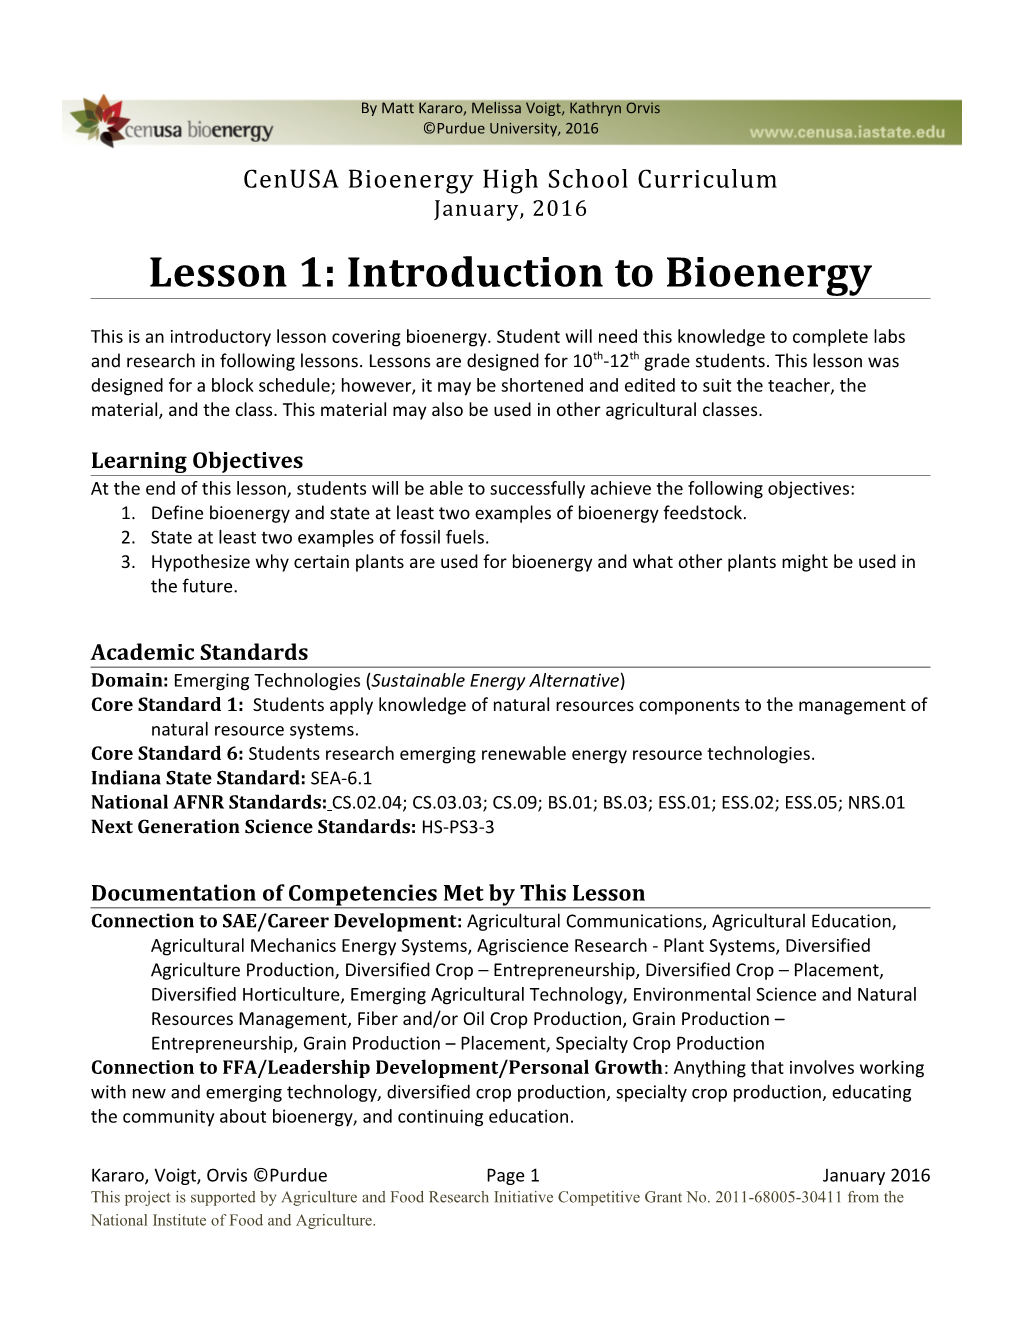 Cenusa Bioenergy High School Curriculum January, 2016